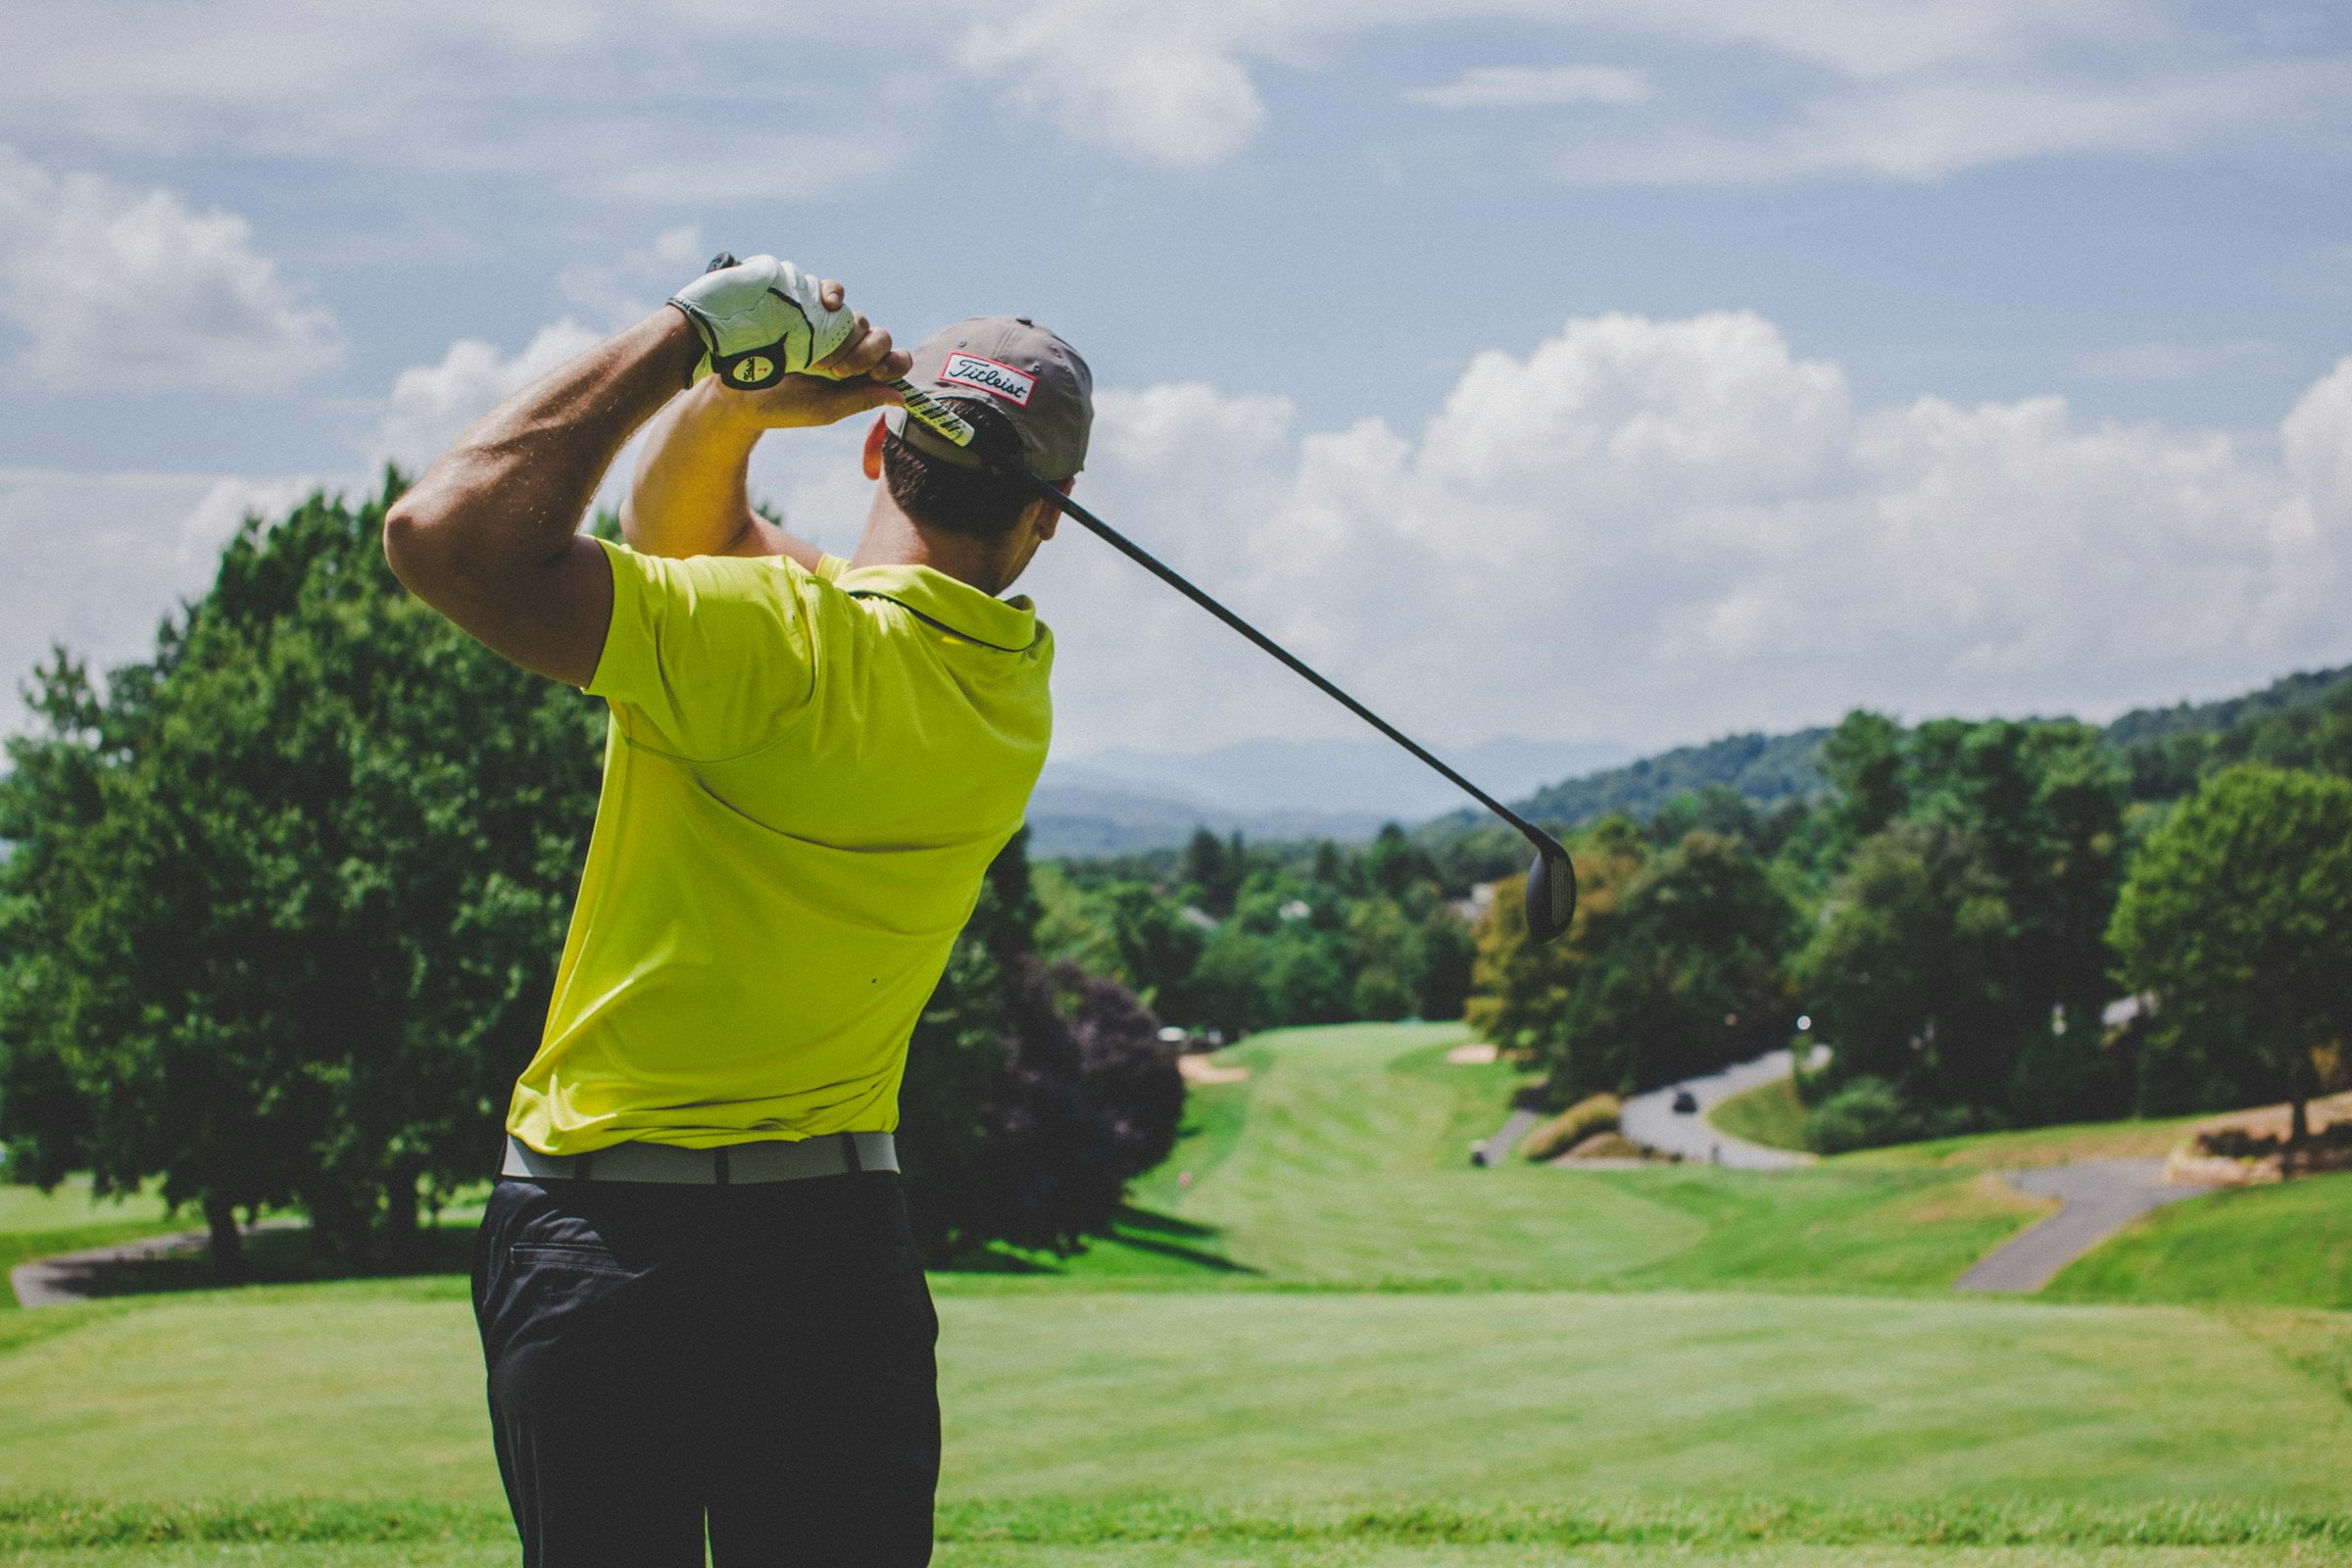 A golfer in a green shirt hitting a golf ball into the distance